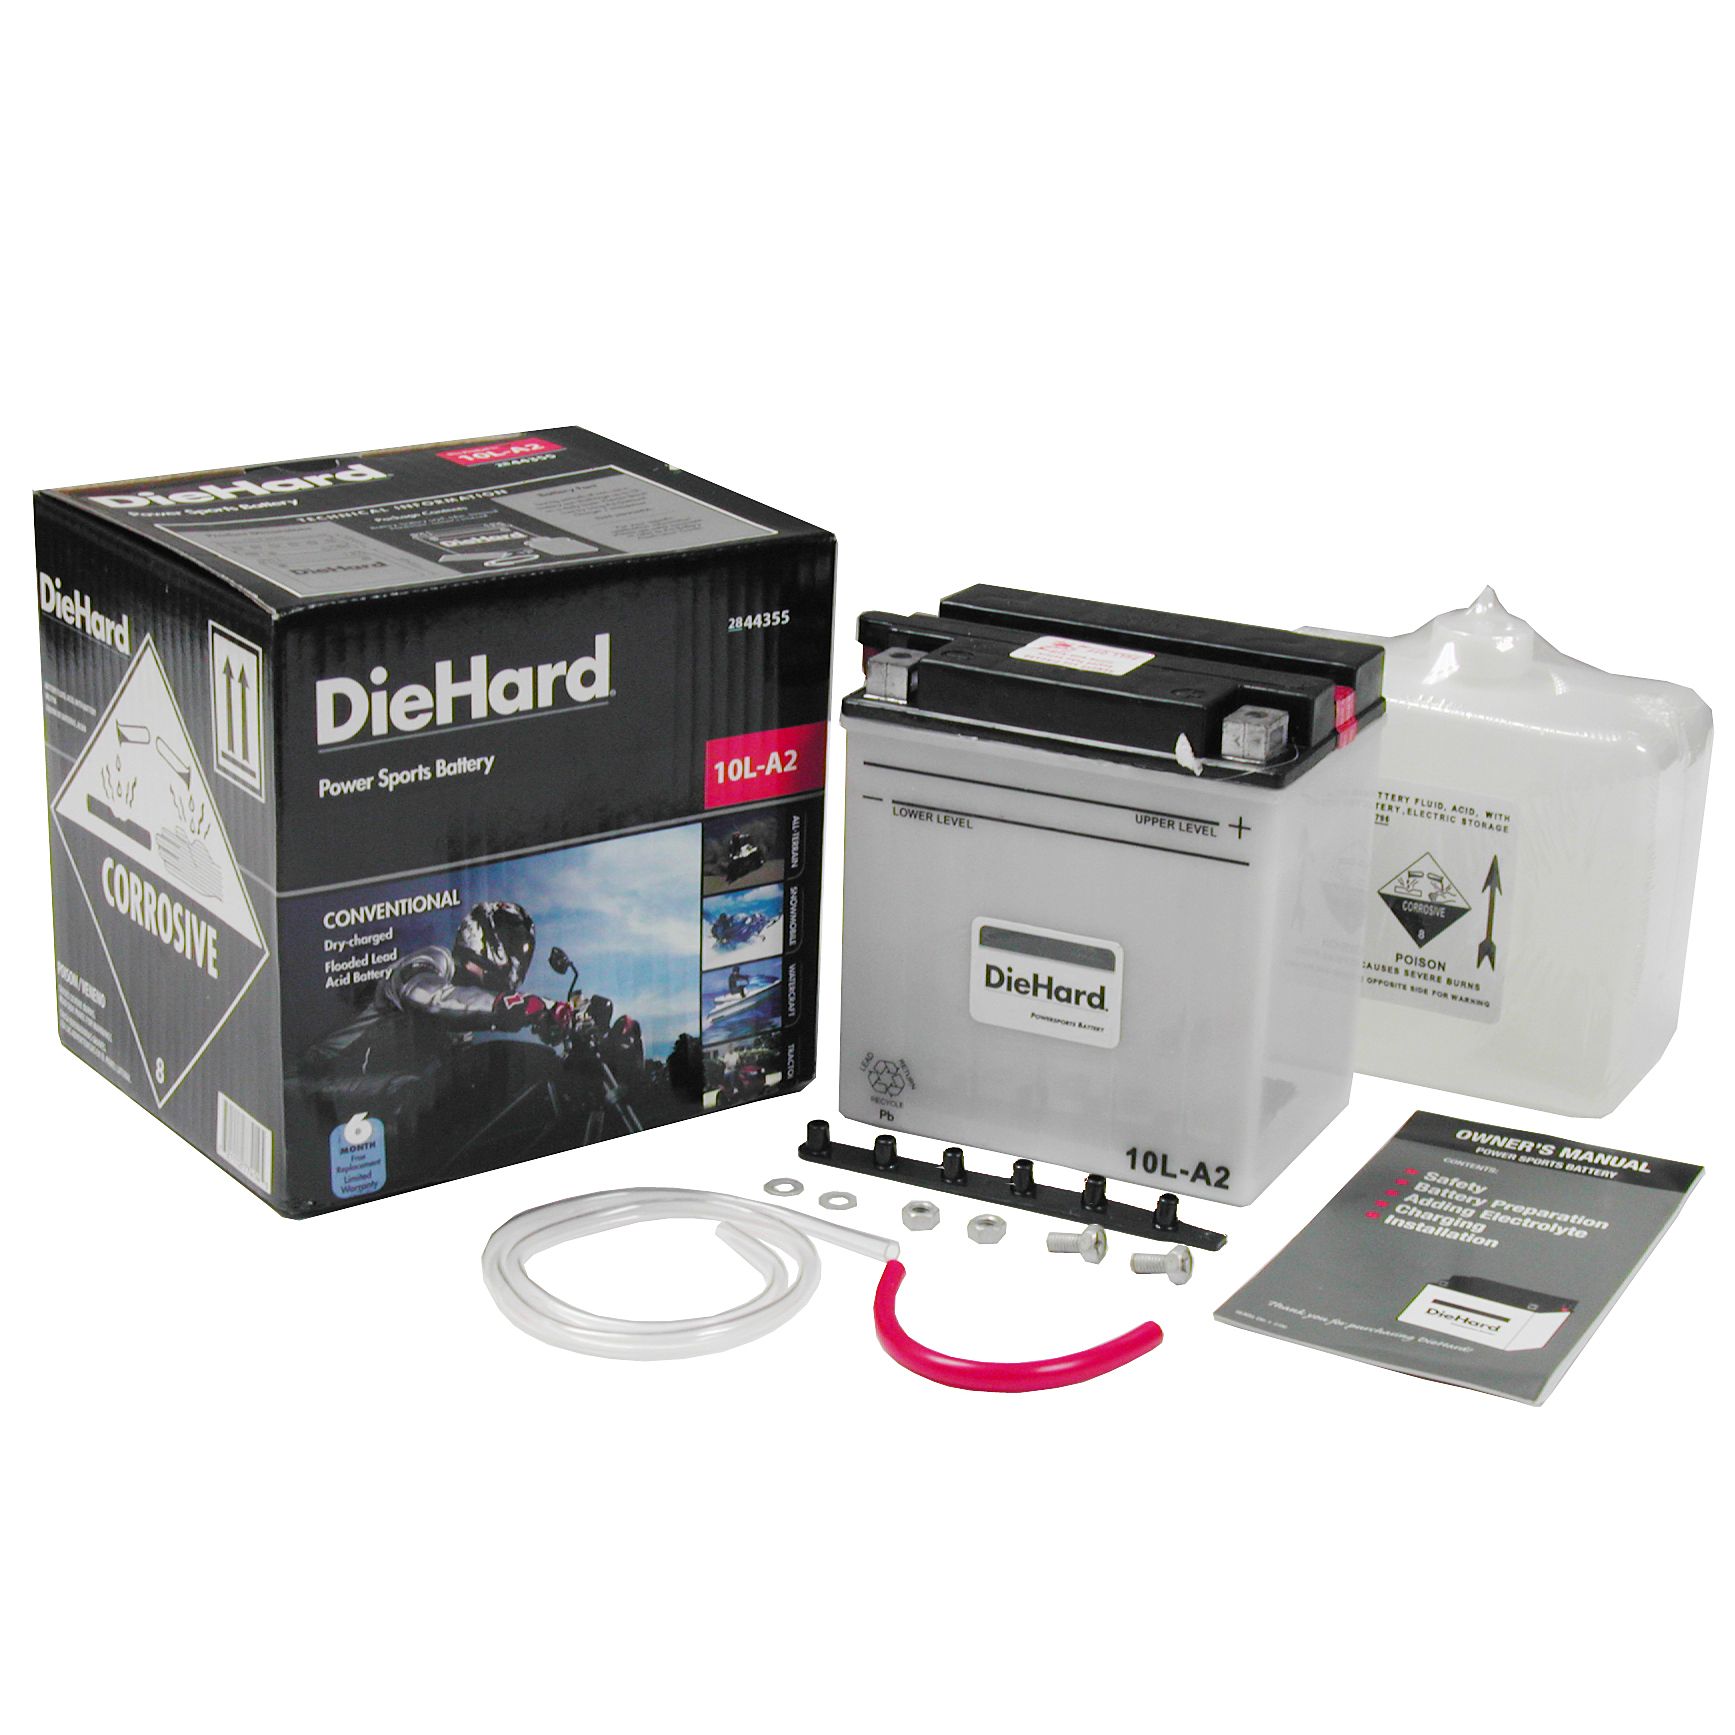 DieHard PowerSport Battery 10L A2   Automotive   Batteries